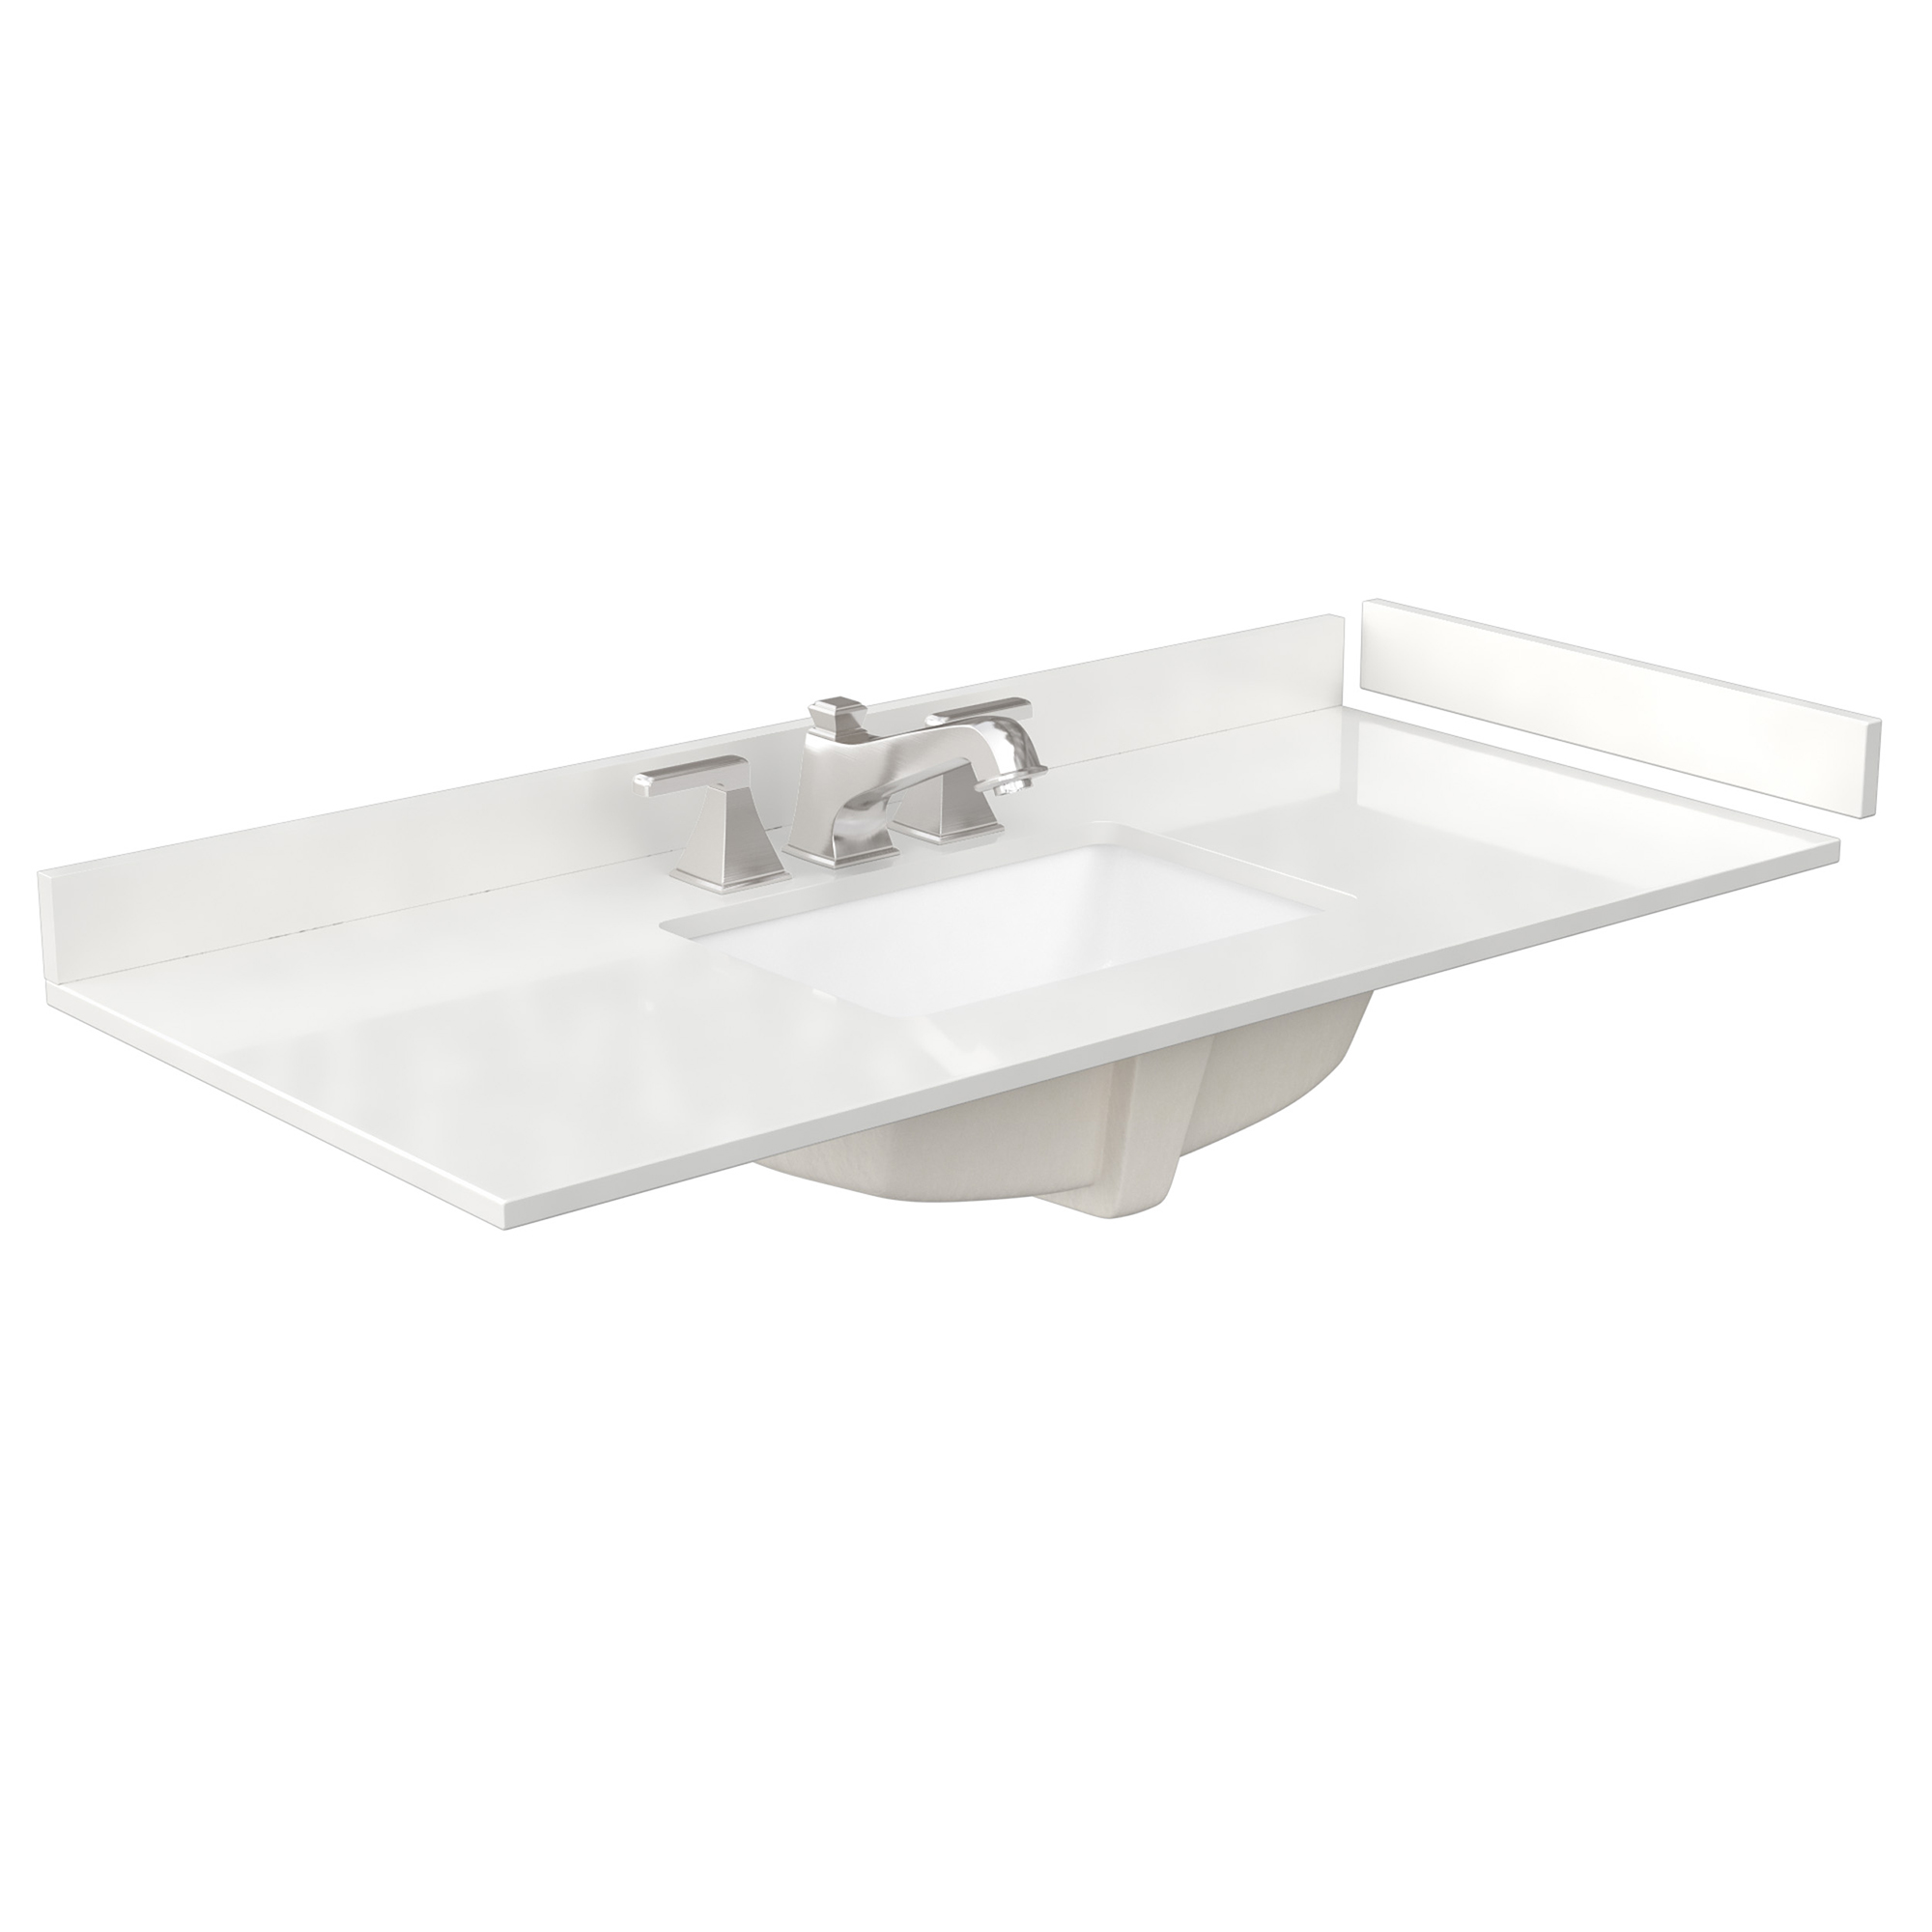 48" Single Countertop - White Quartz (1000) with Undermount Square Sink (3-Hole) - Includes Backsplash and Sidesplash WCFQC348STOPUNSWQ